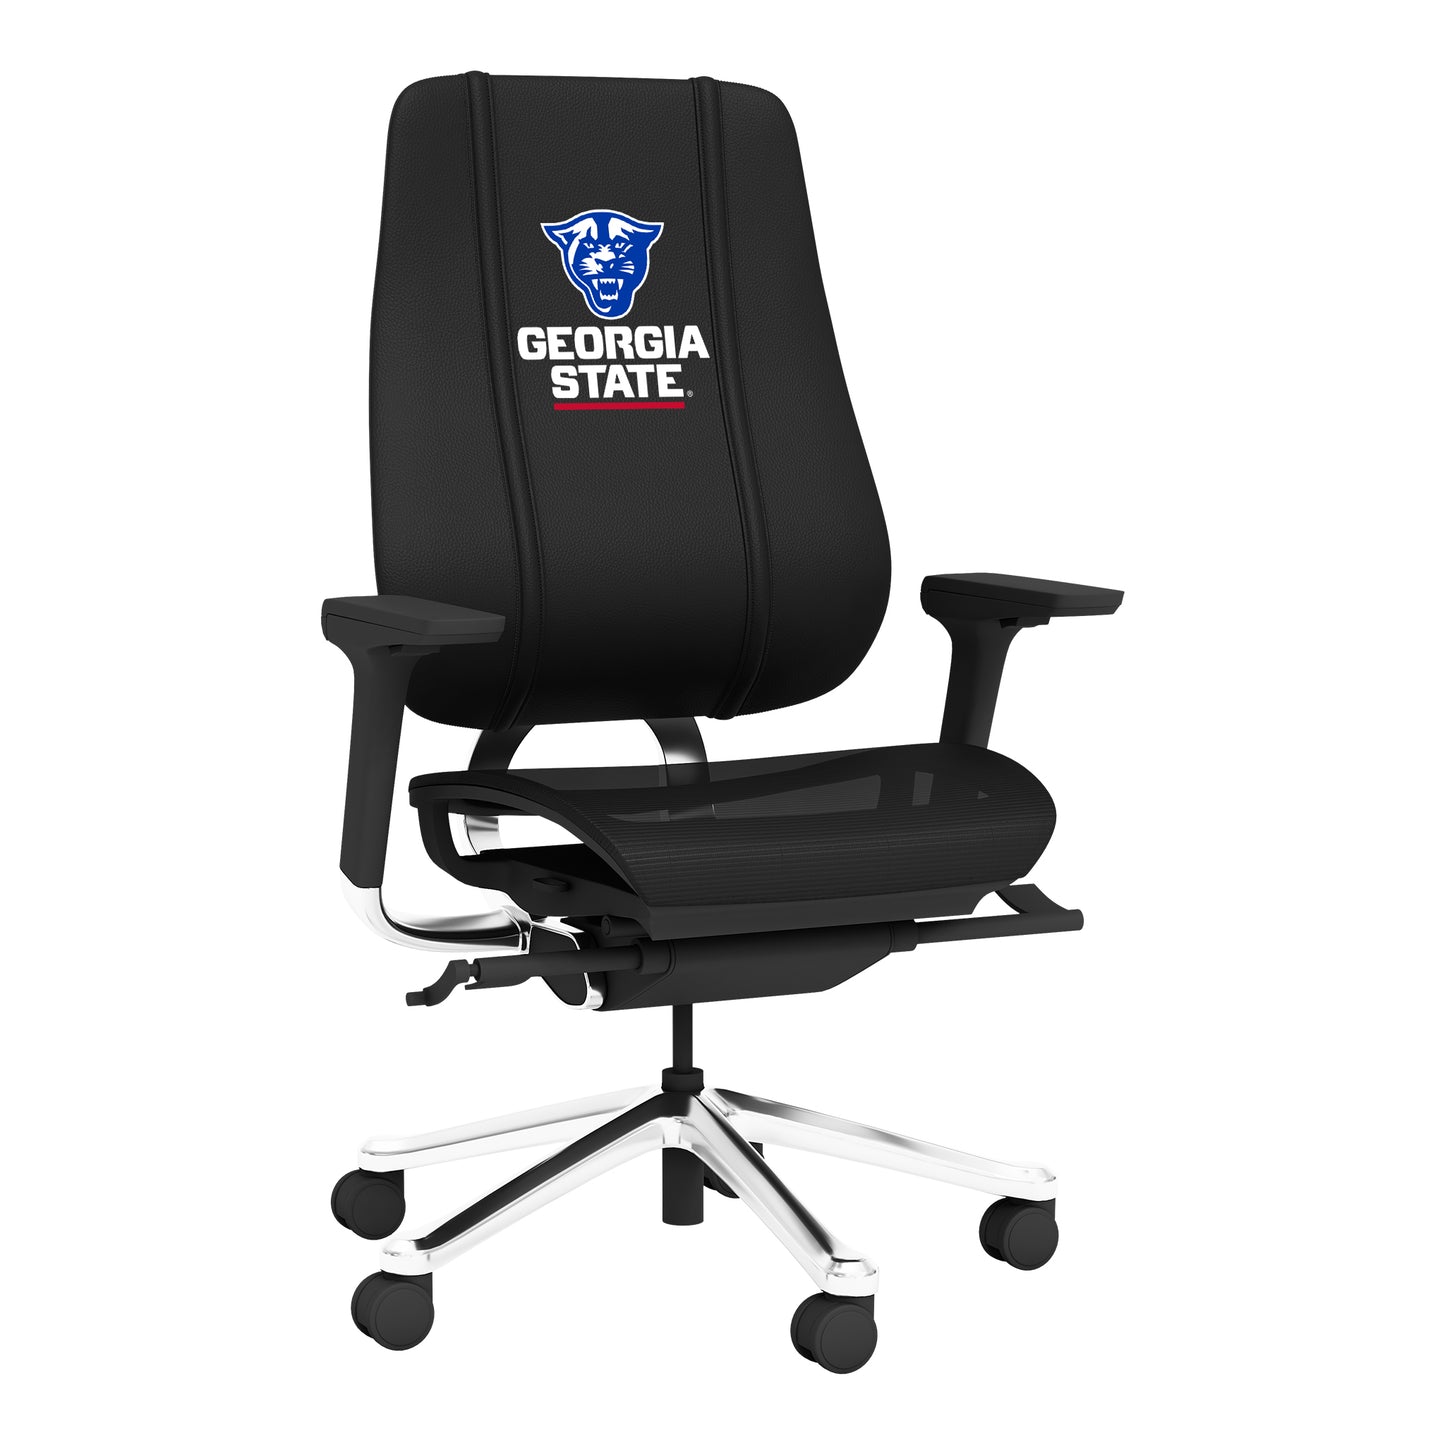 PhantomX Gaming Chair with Georgia State University Primary Logo